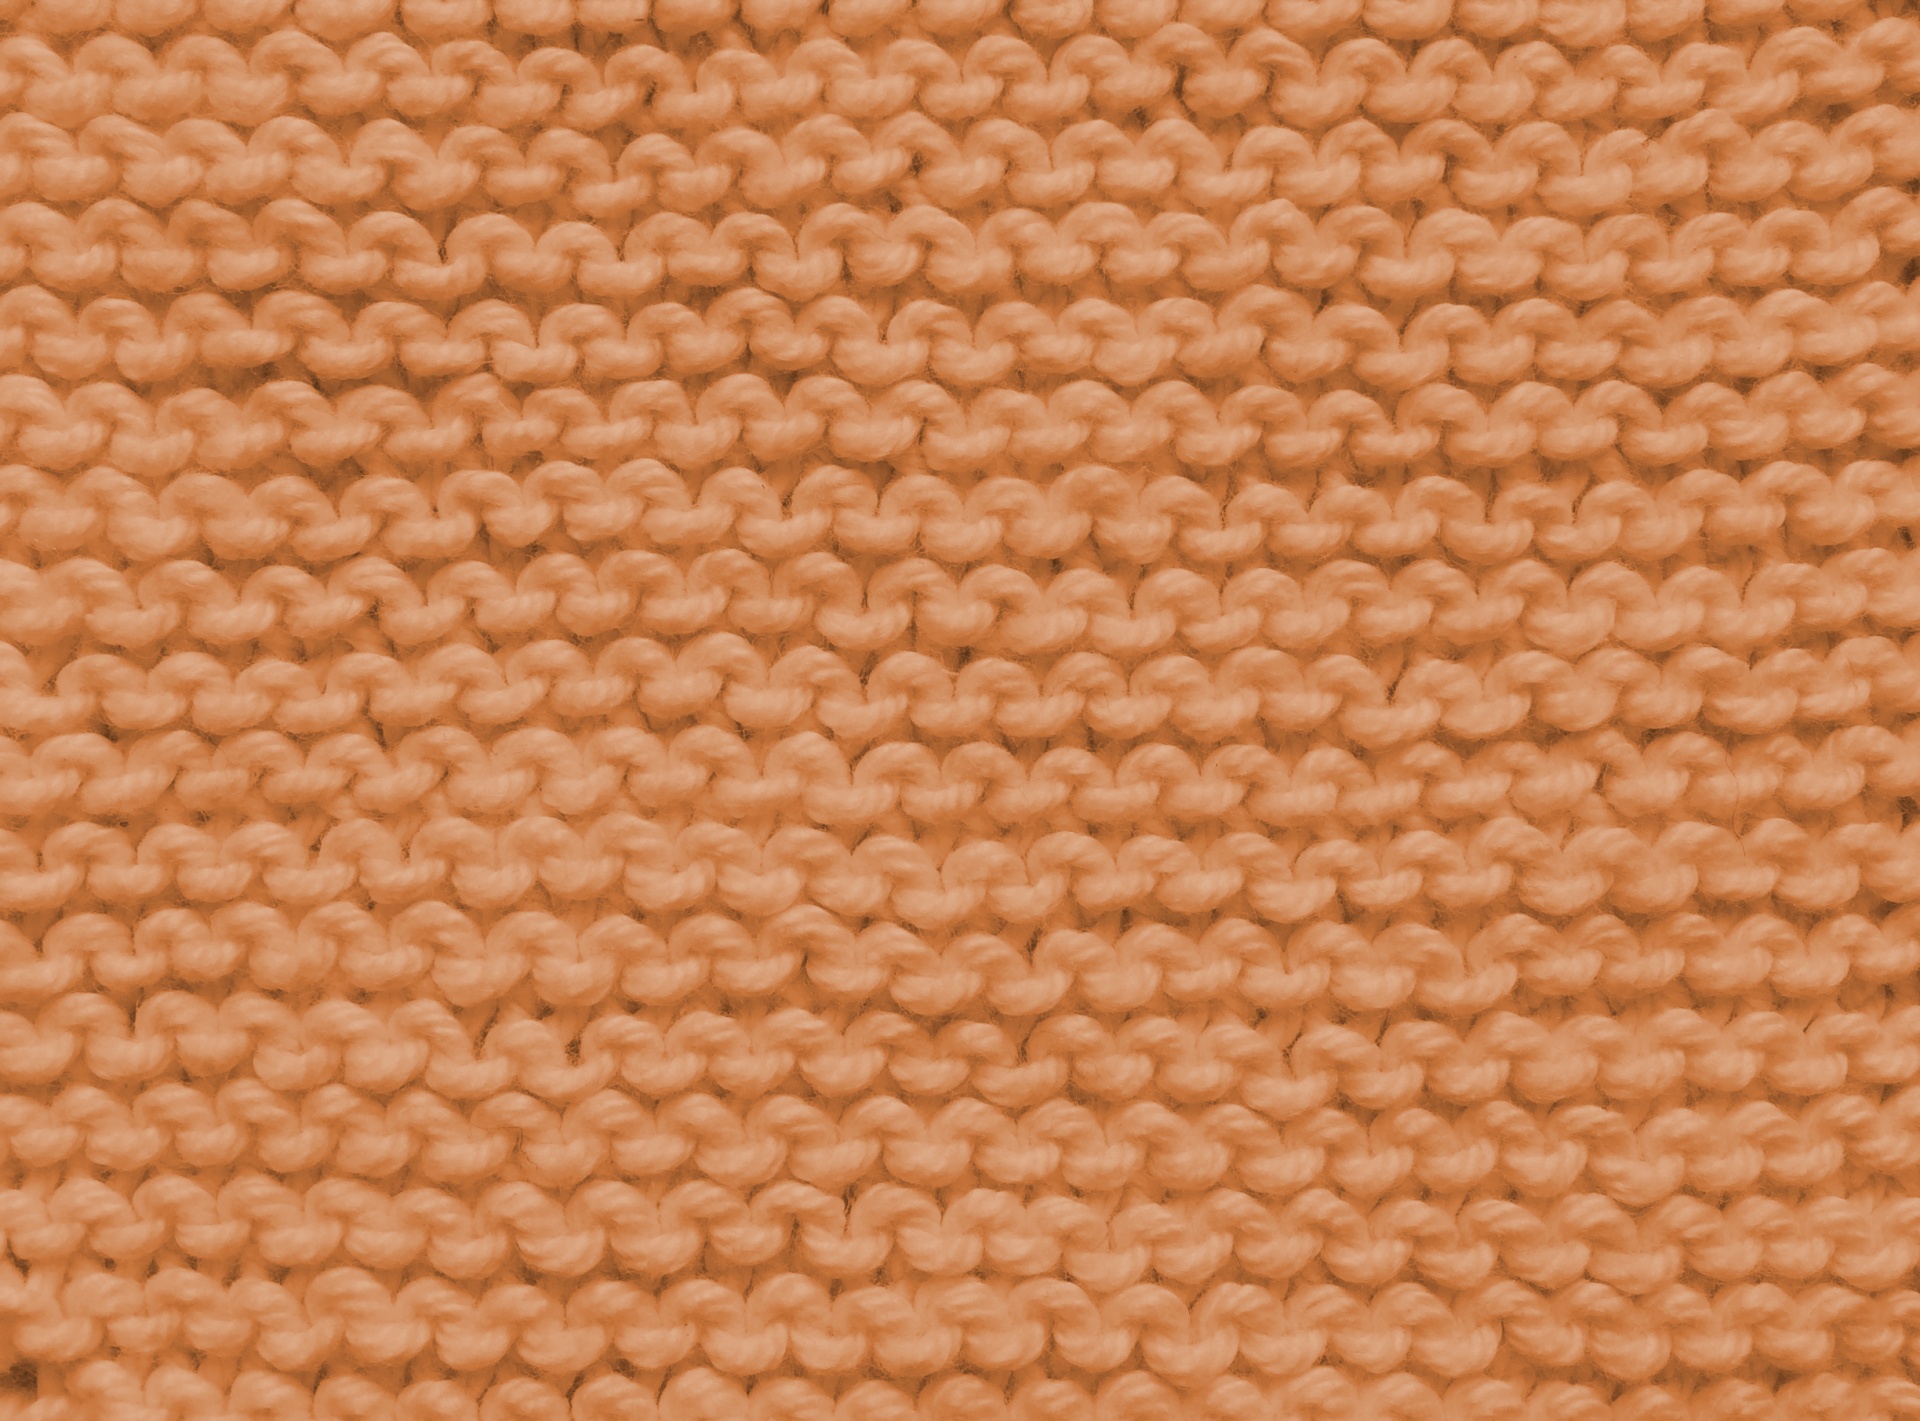 Knitting Texture Orange Background